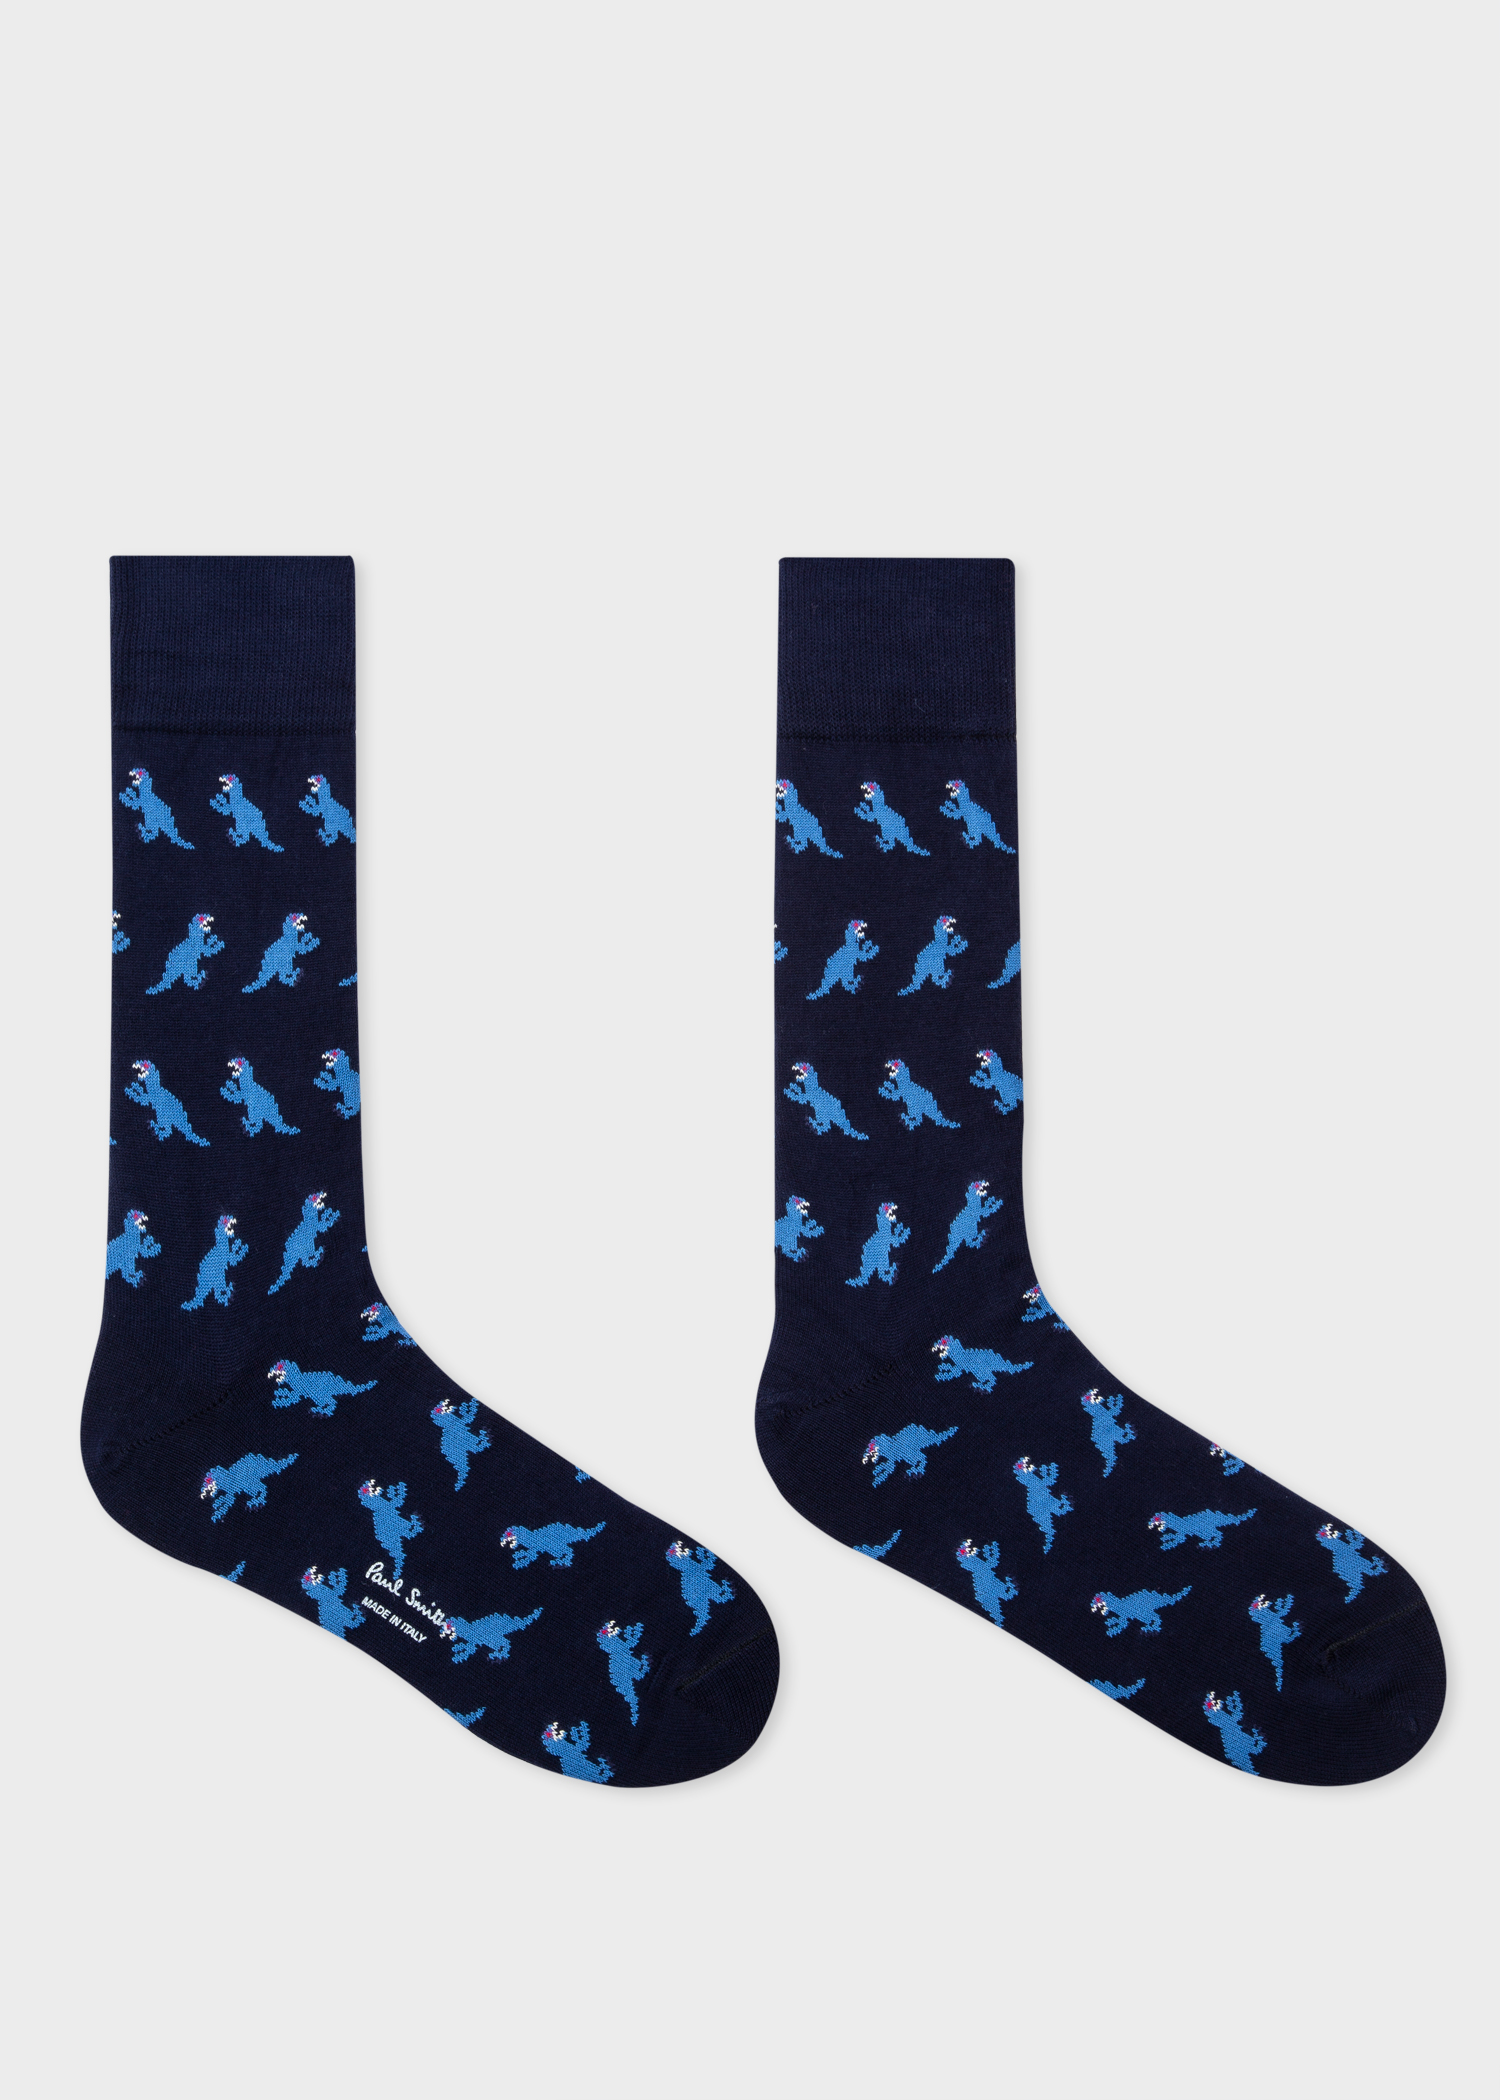 Navy pair - Men's Multi-Coloured 'Dino' Socks Three Pack Paul Smith